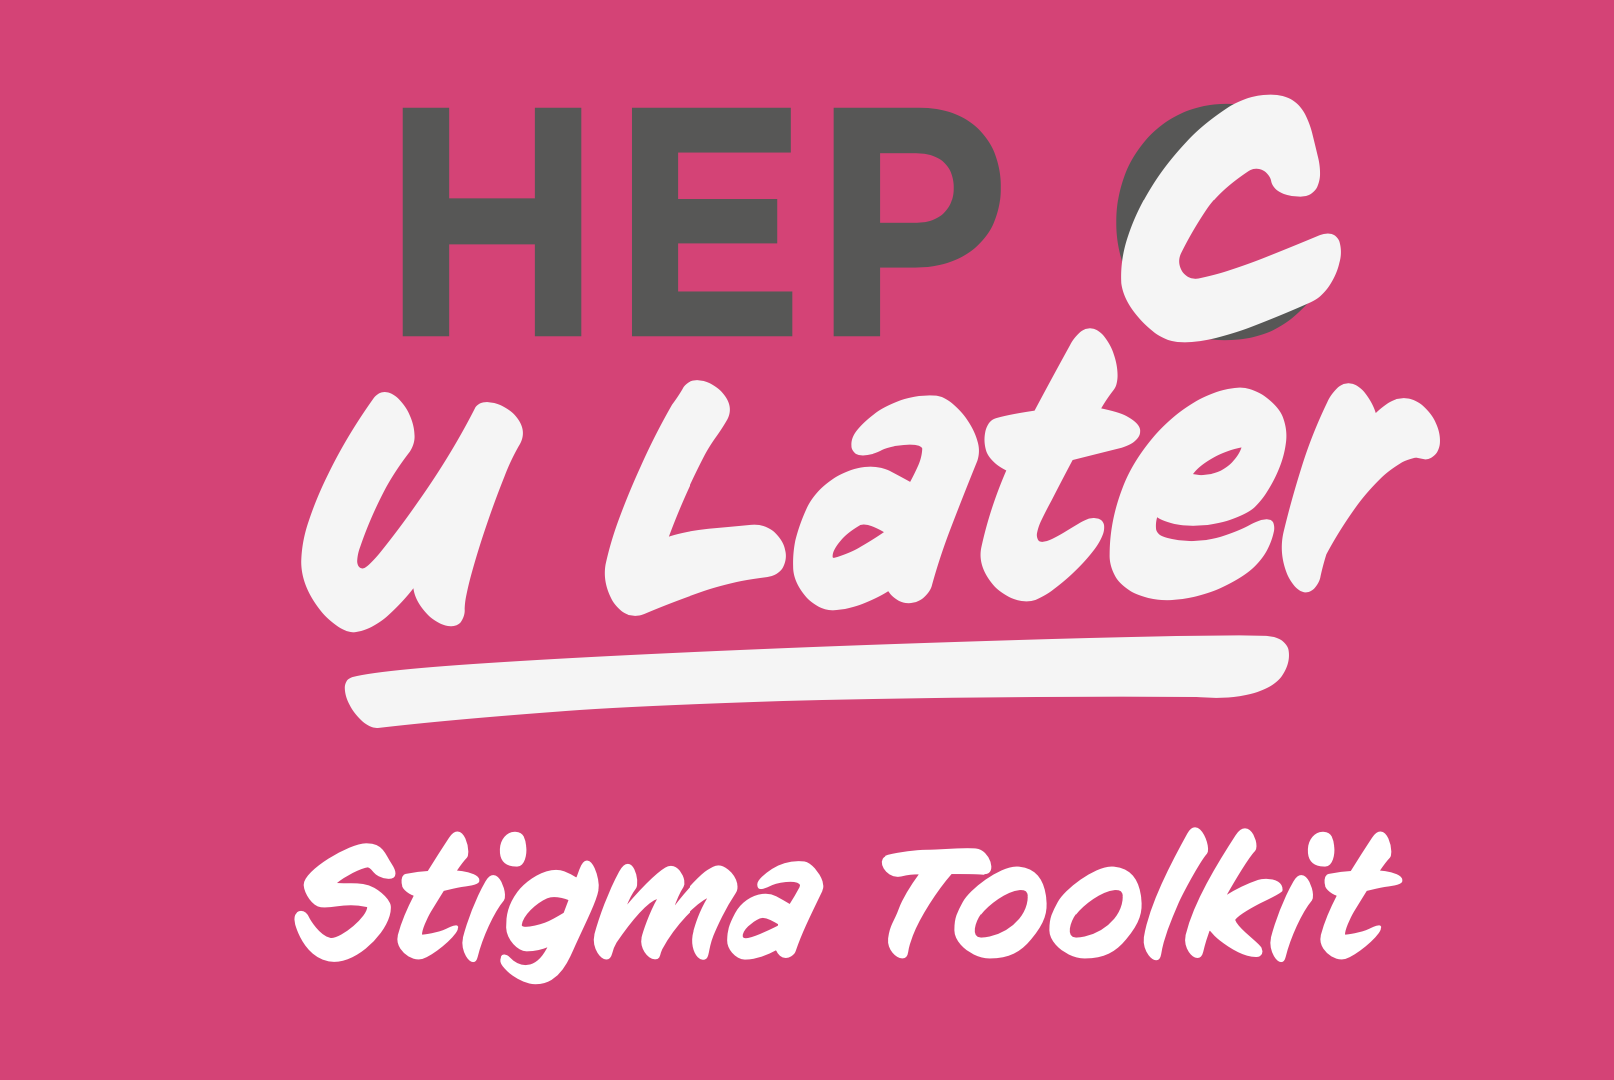 HCUL Stigma Toolkit featured image